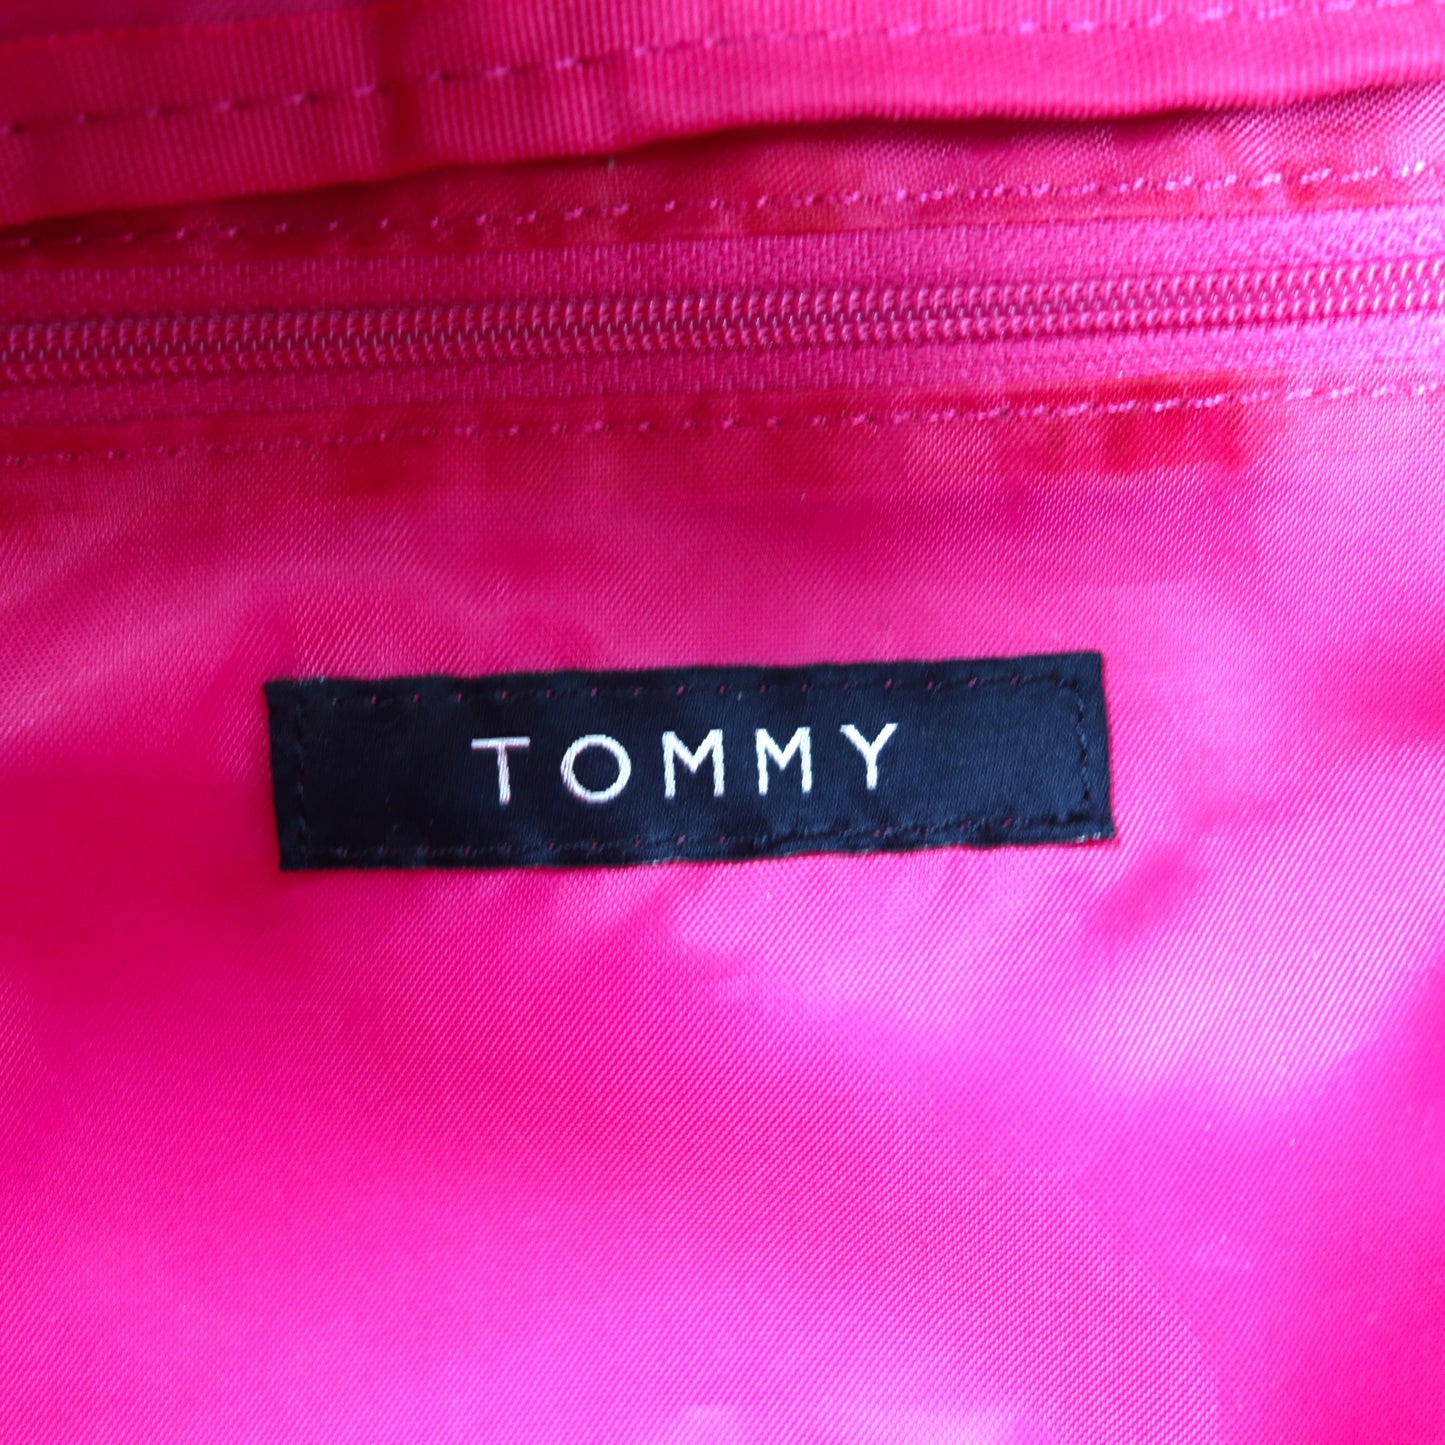 TOMMY ウエストバッグ ピンク ポリエステル ロゴ